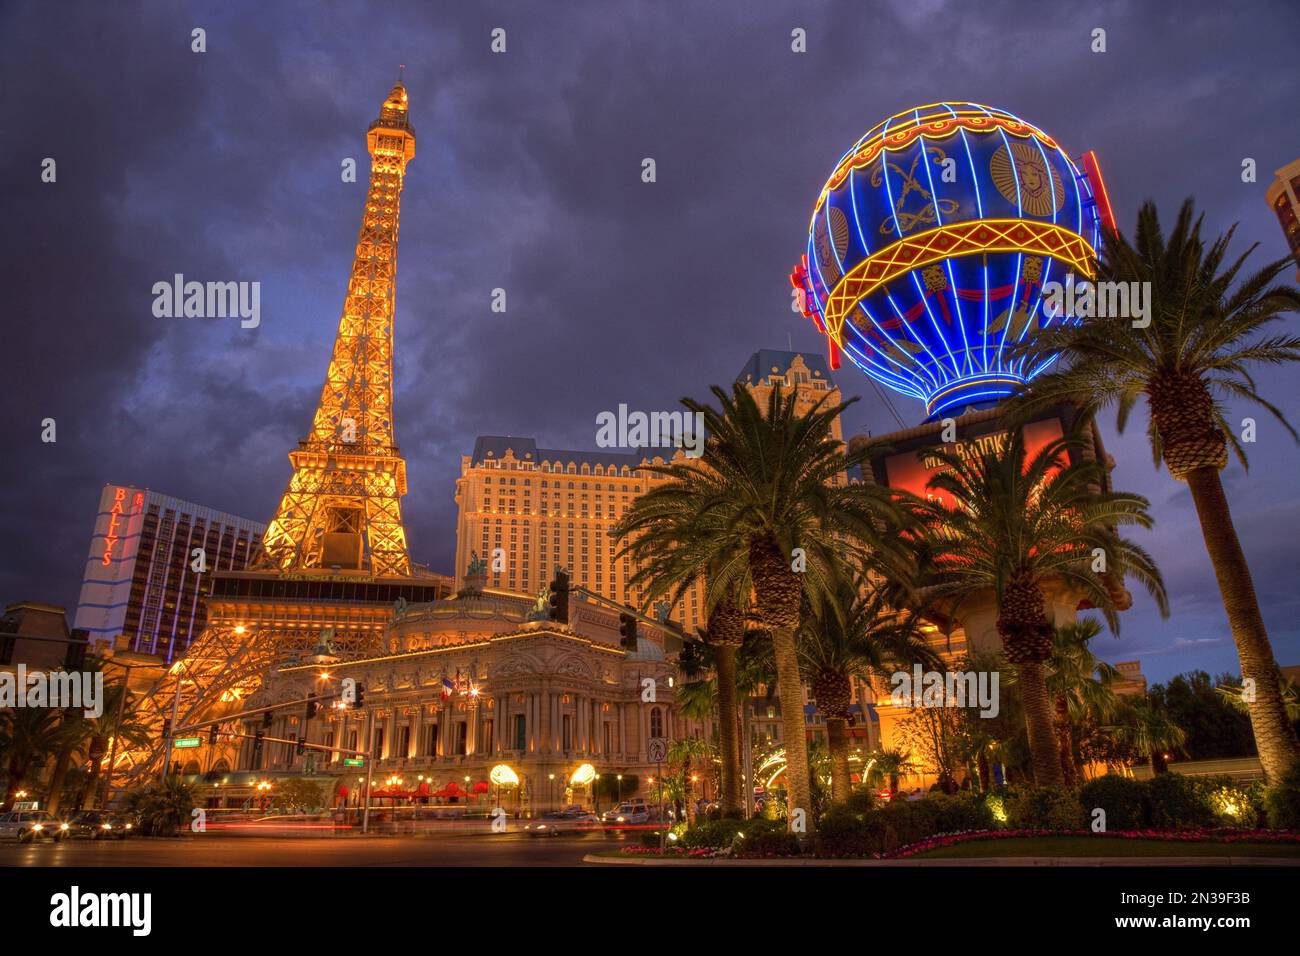 Il Paris Las Vegas Hotel e Casino Di notte, Paradiso, Las Vegas, Nevada, STATI UNITI D'AMERICA Foto Stock